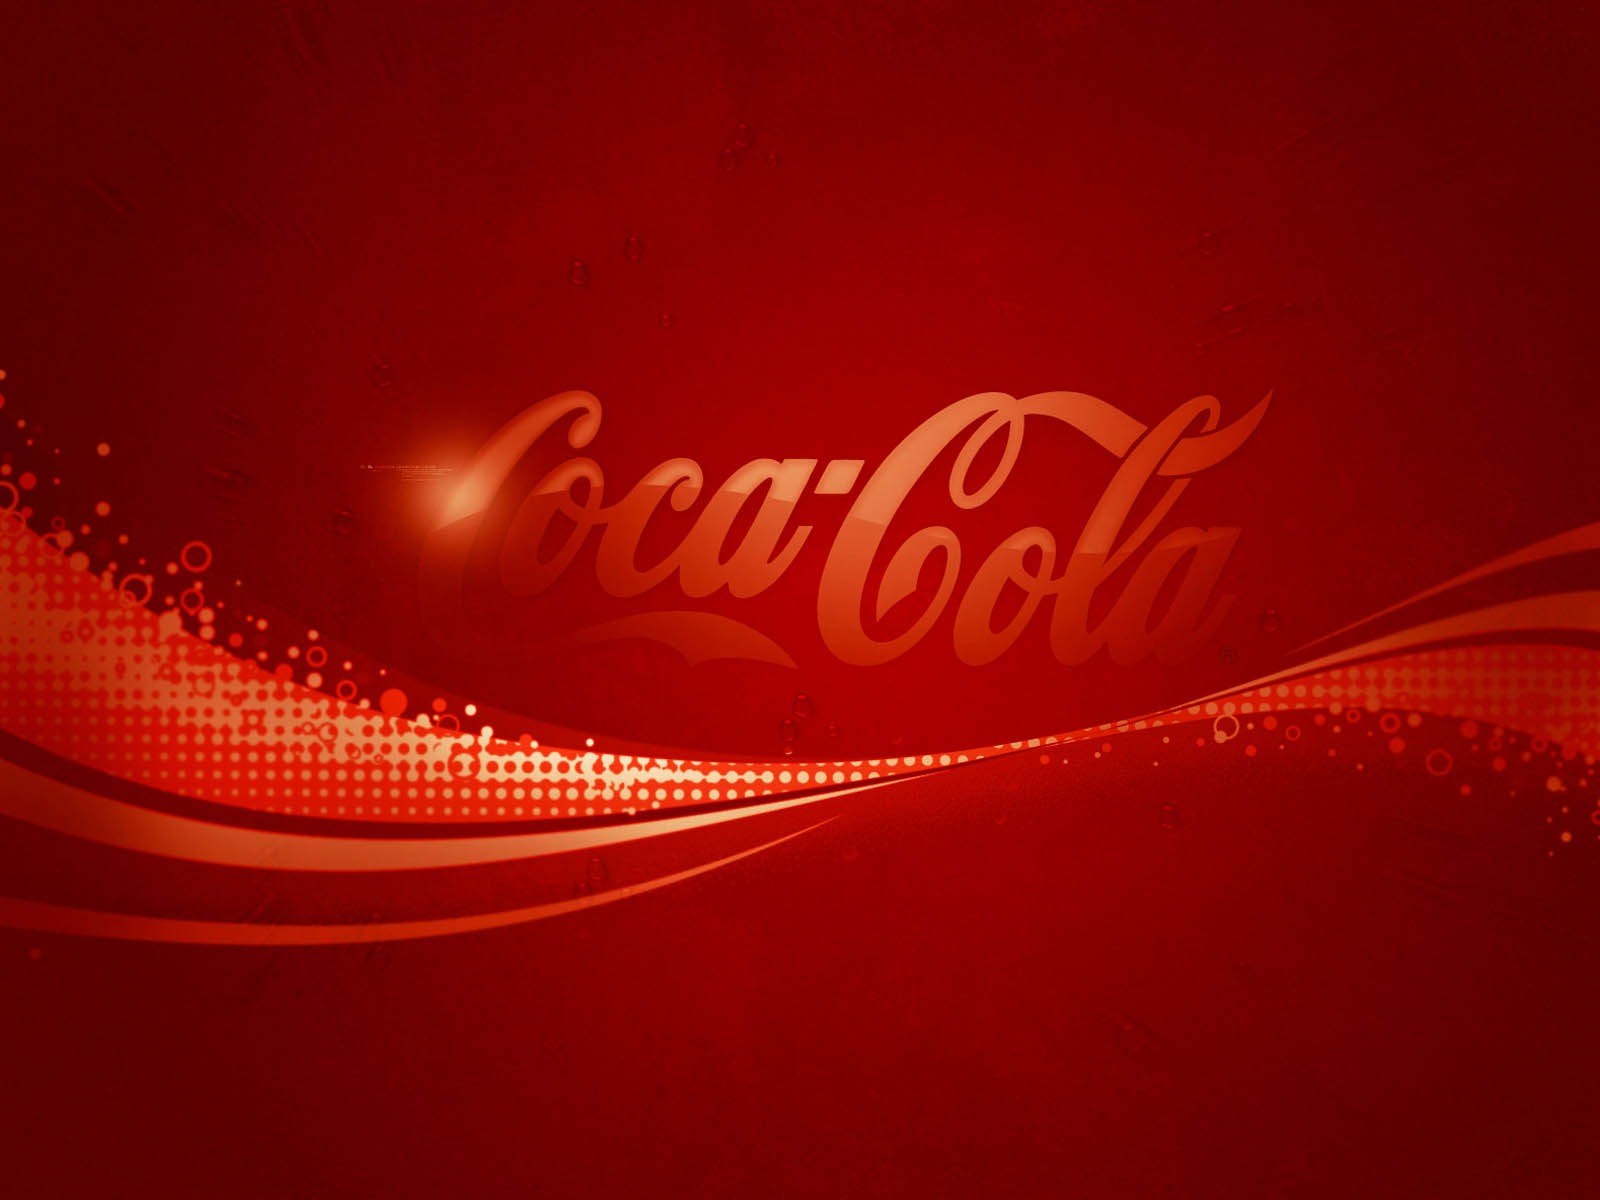 Wallpapers Coca Cola Wallpapers HD Wallpapers Download Free Images Wallpaper [wallpaper981.blogspot.com]